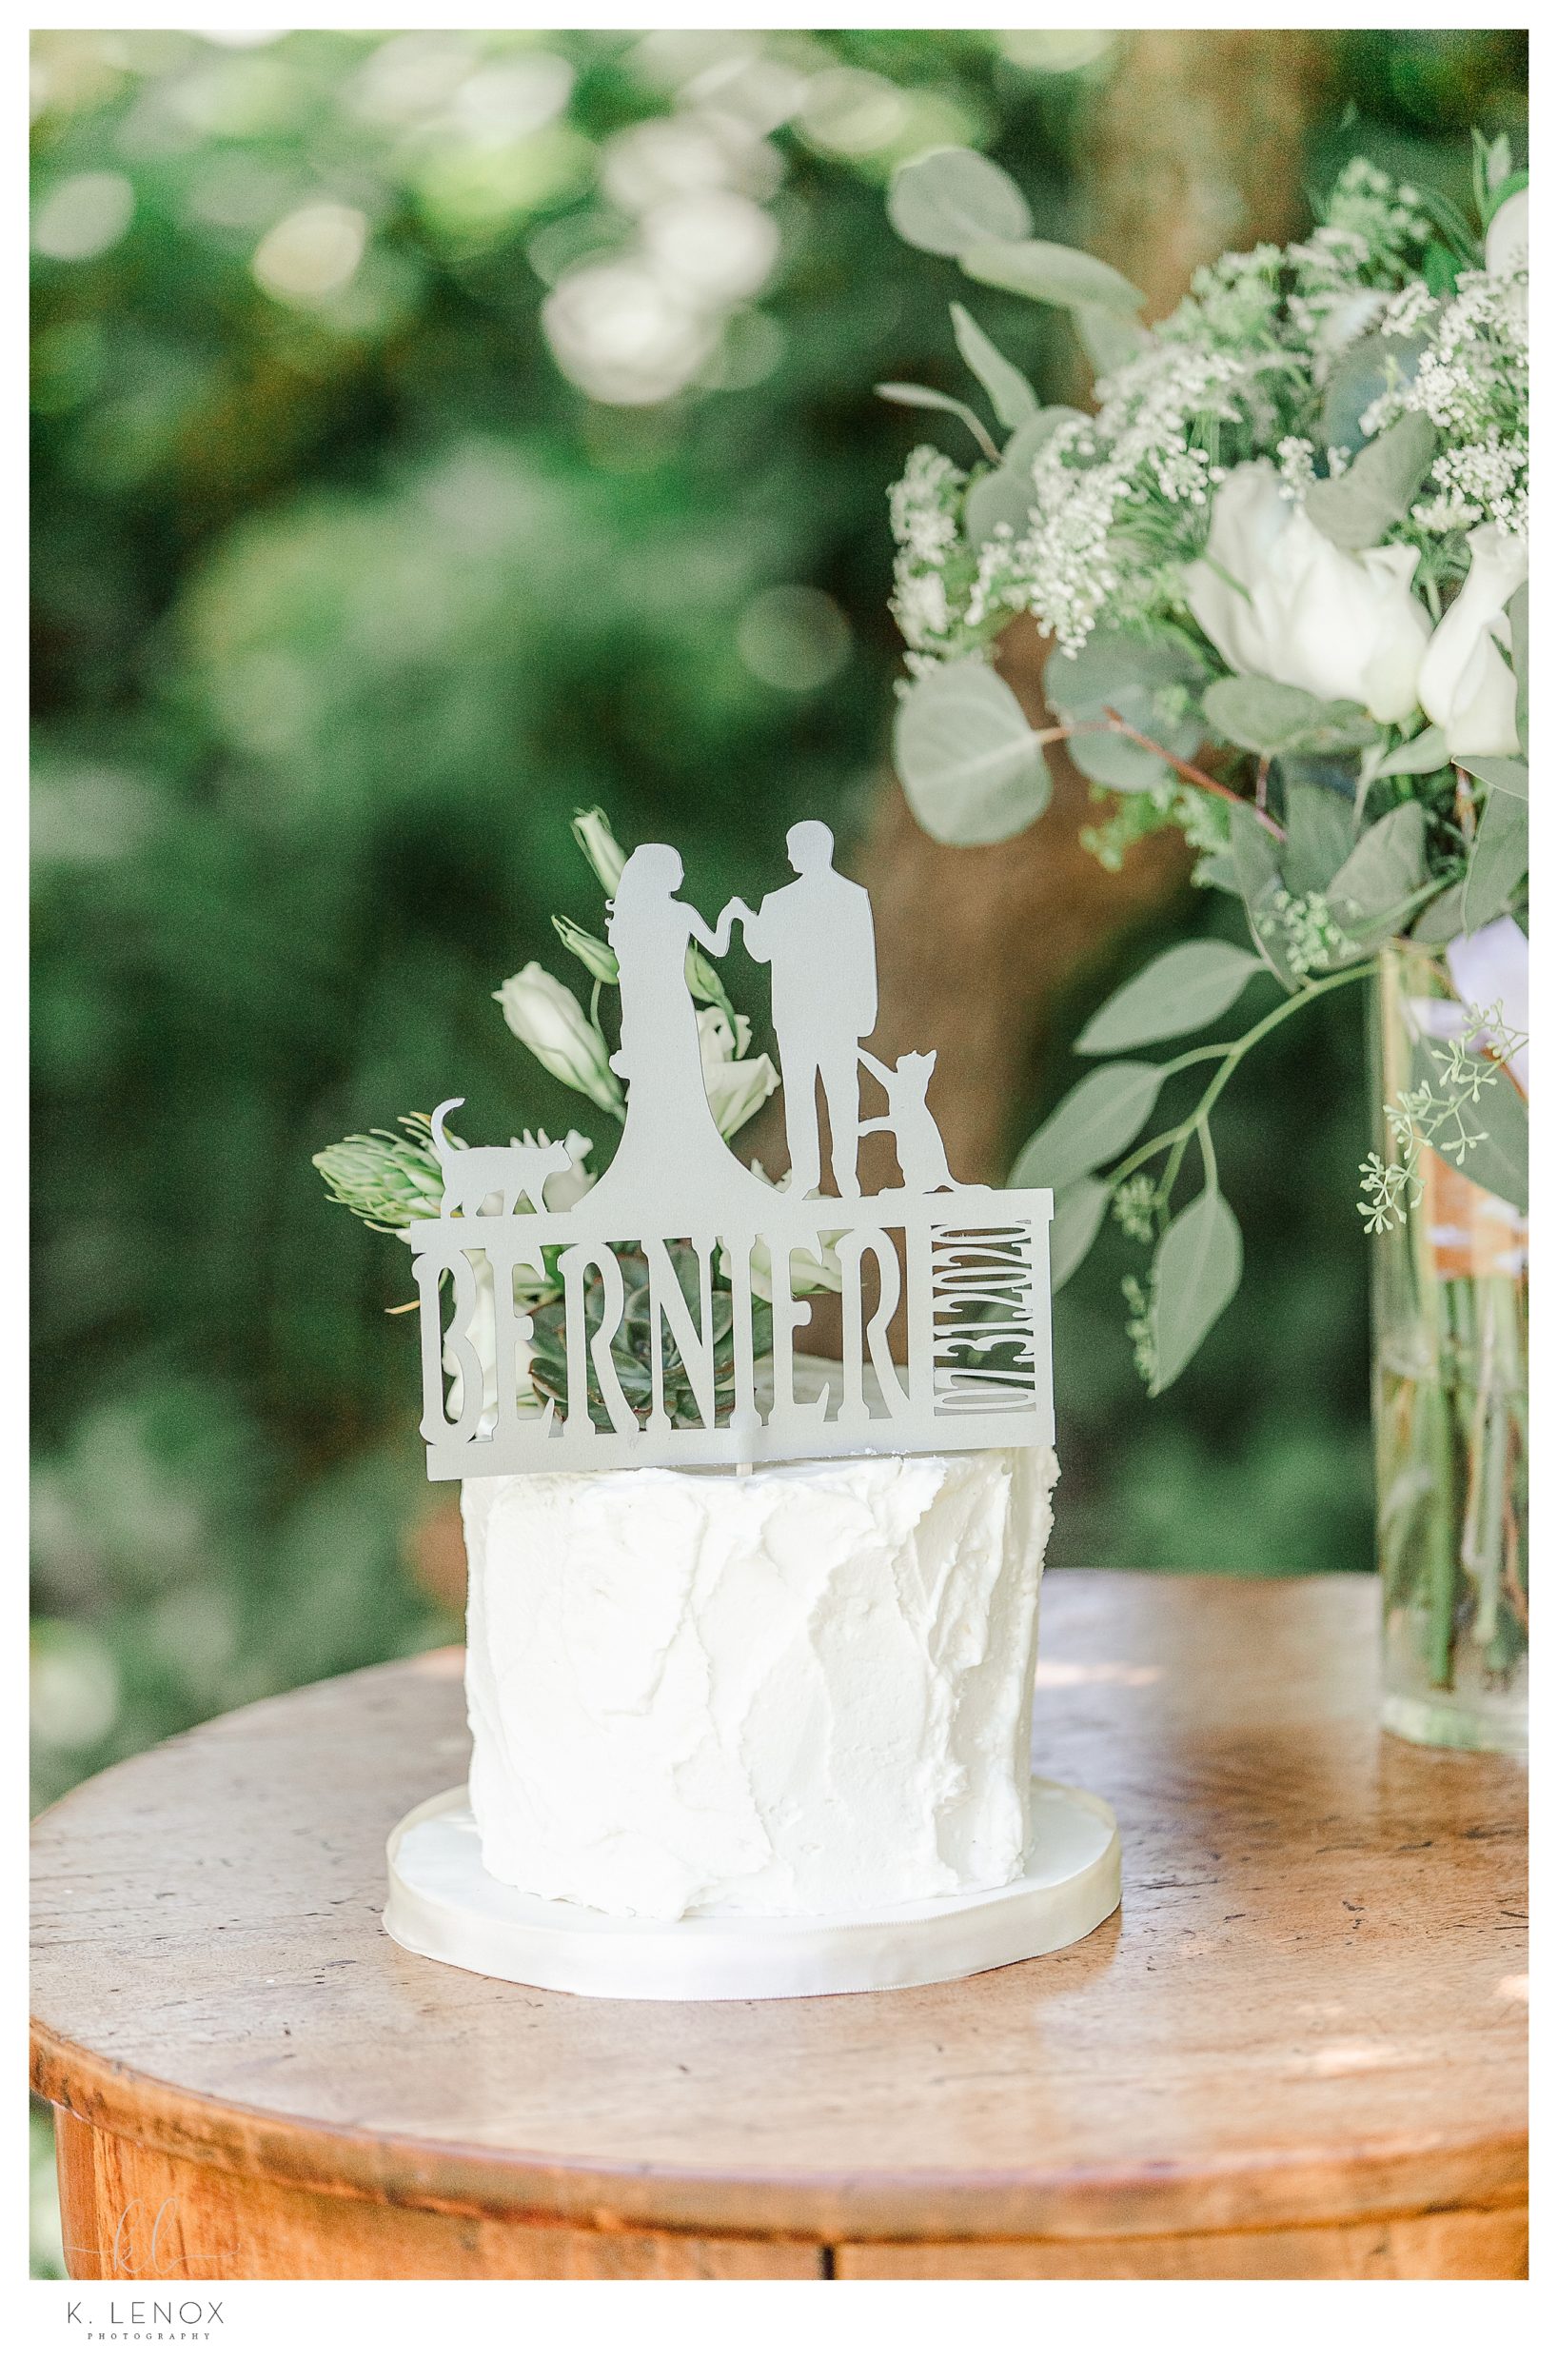 White, single tier wedding cake.  